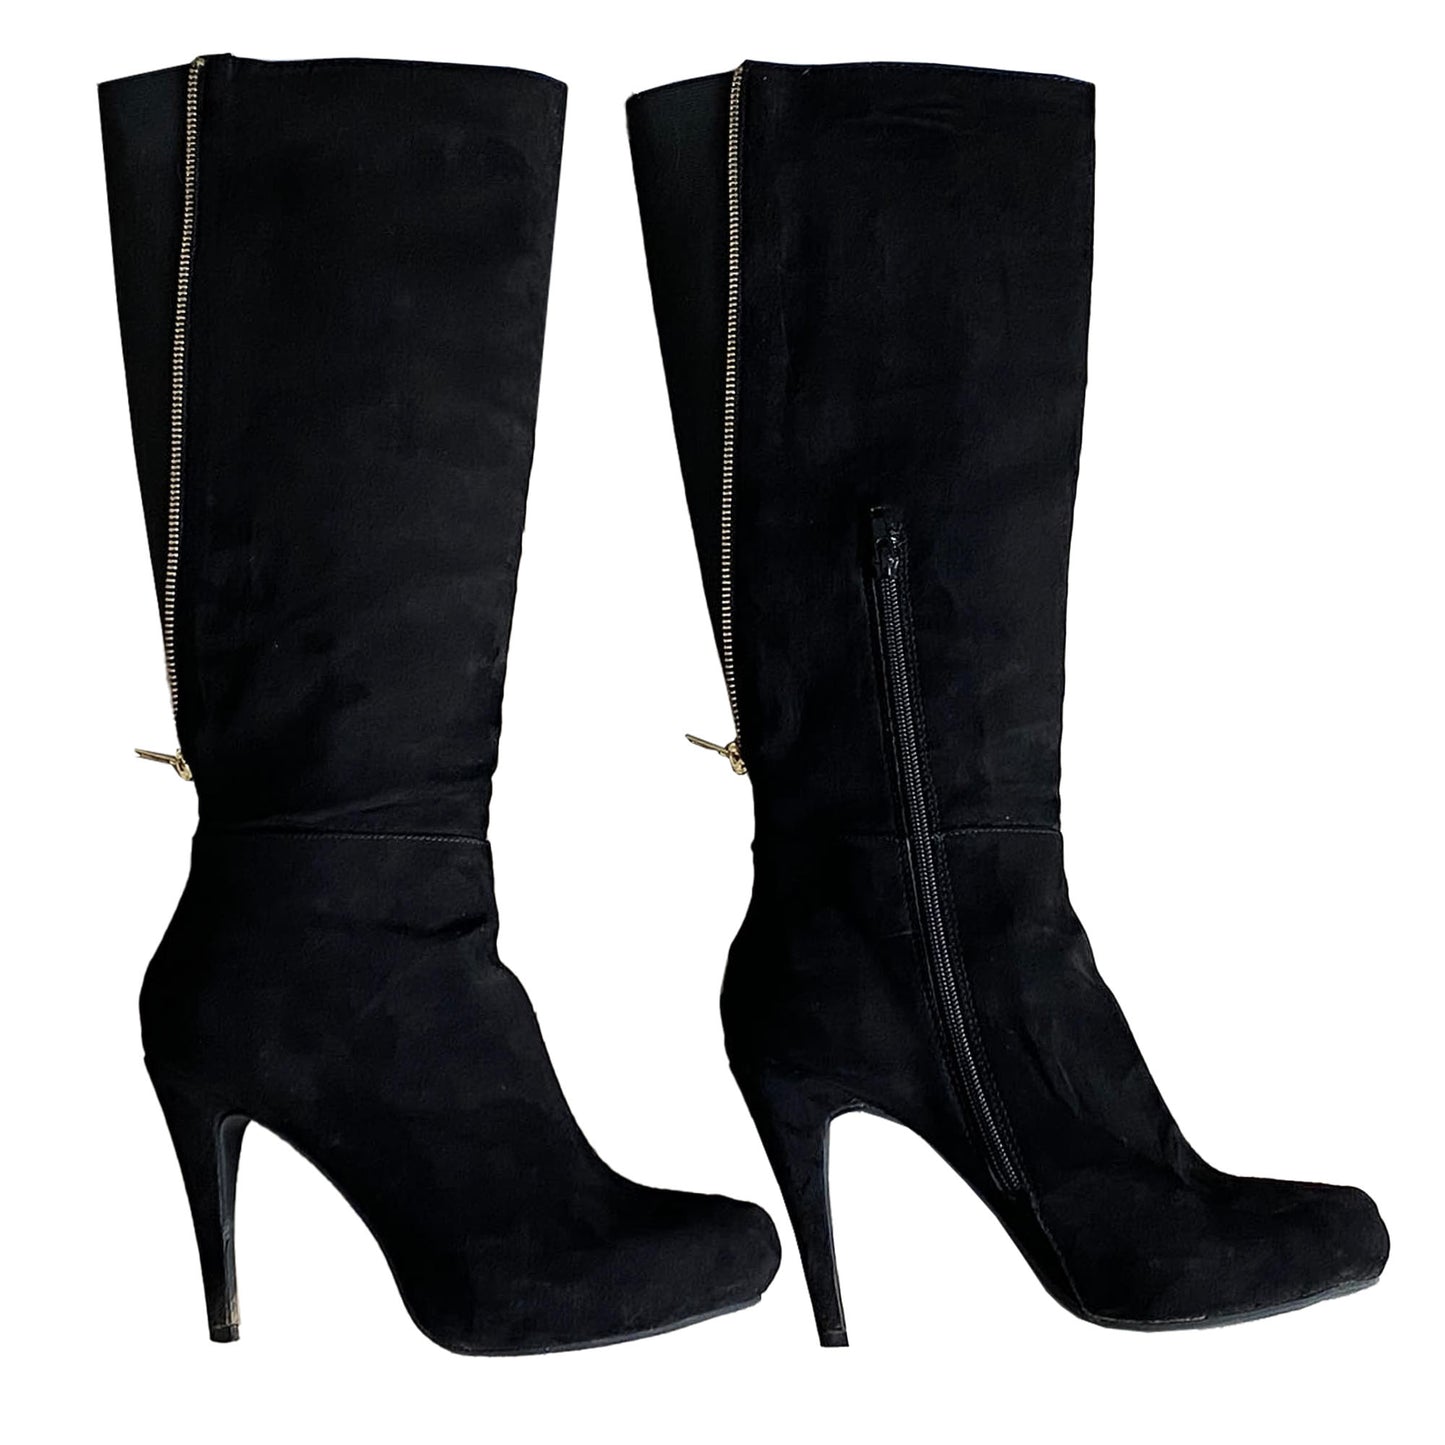 BlackSuedeHighHeel-Fashion-Boots-side-view.-Leg.-Size-8M